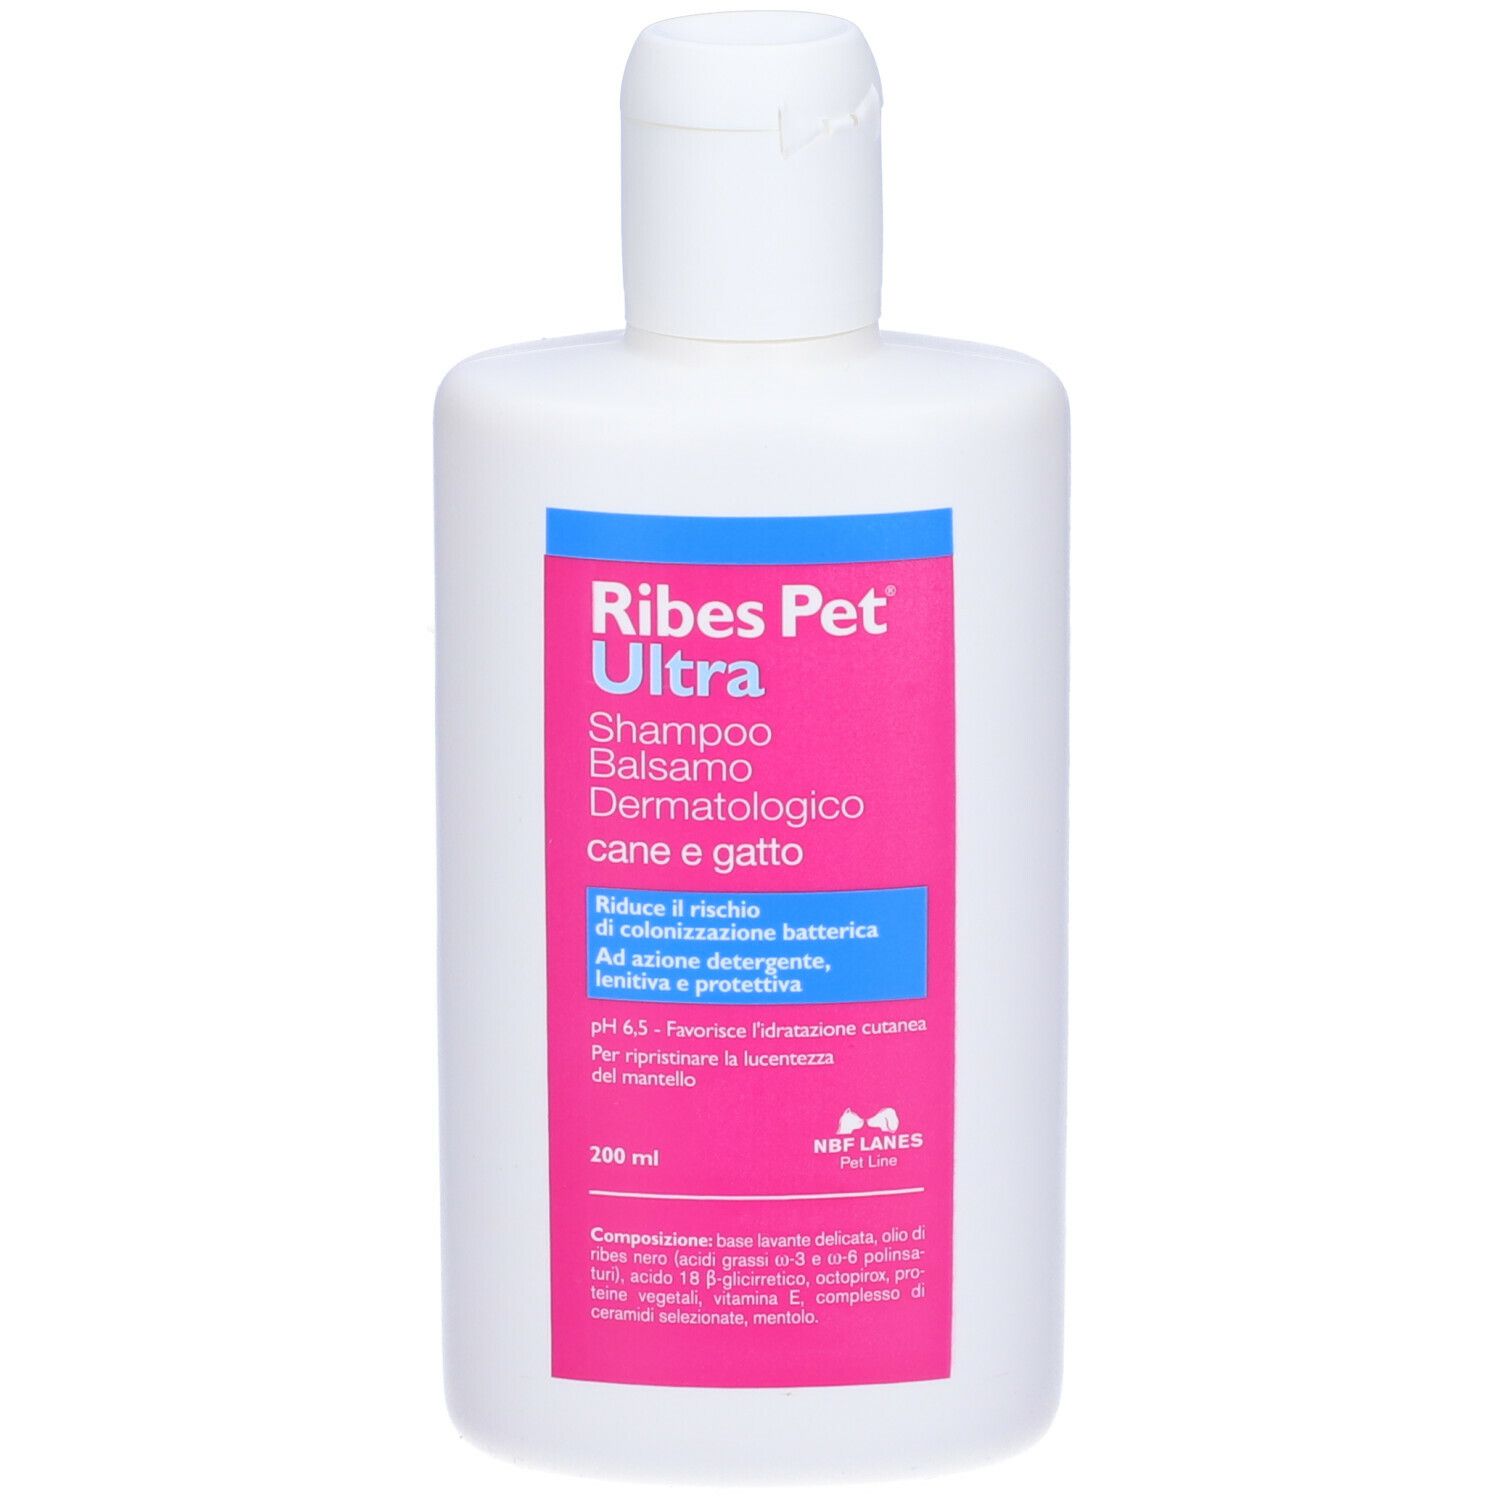 NBF LANES Ribes PET Ultra Shampoo Dermatologico